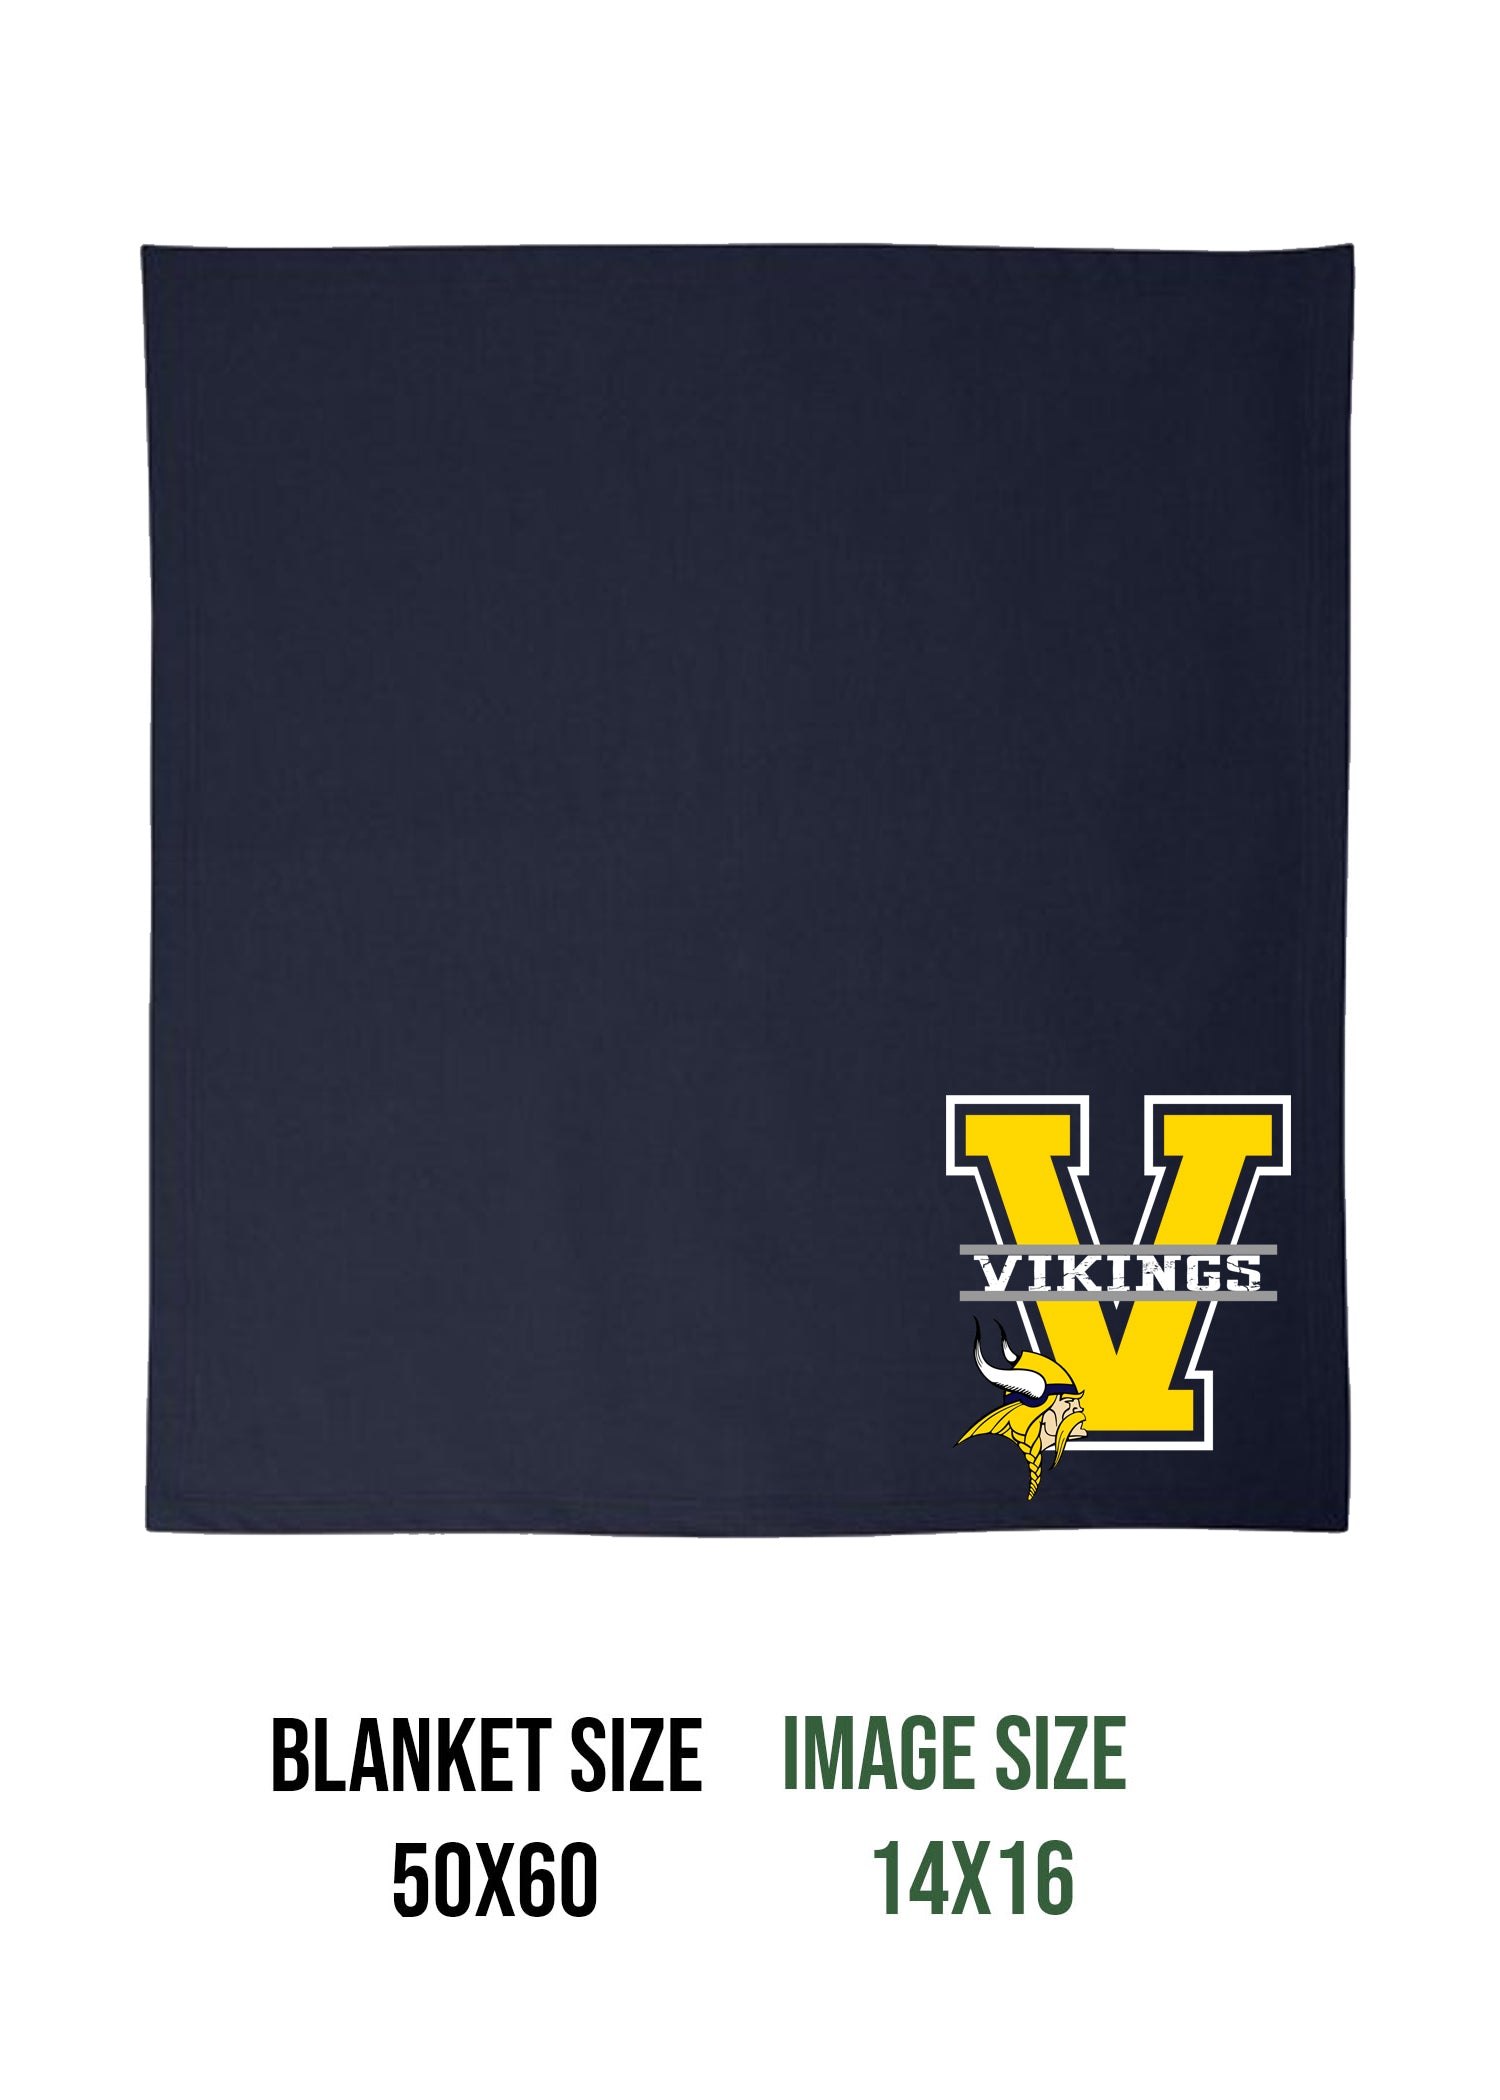 Vernon Design 24 Blanket